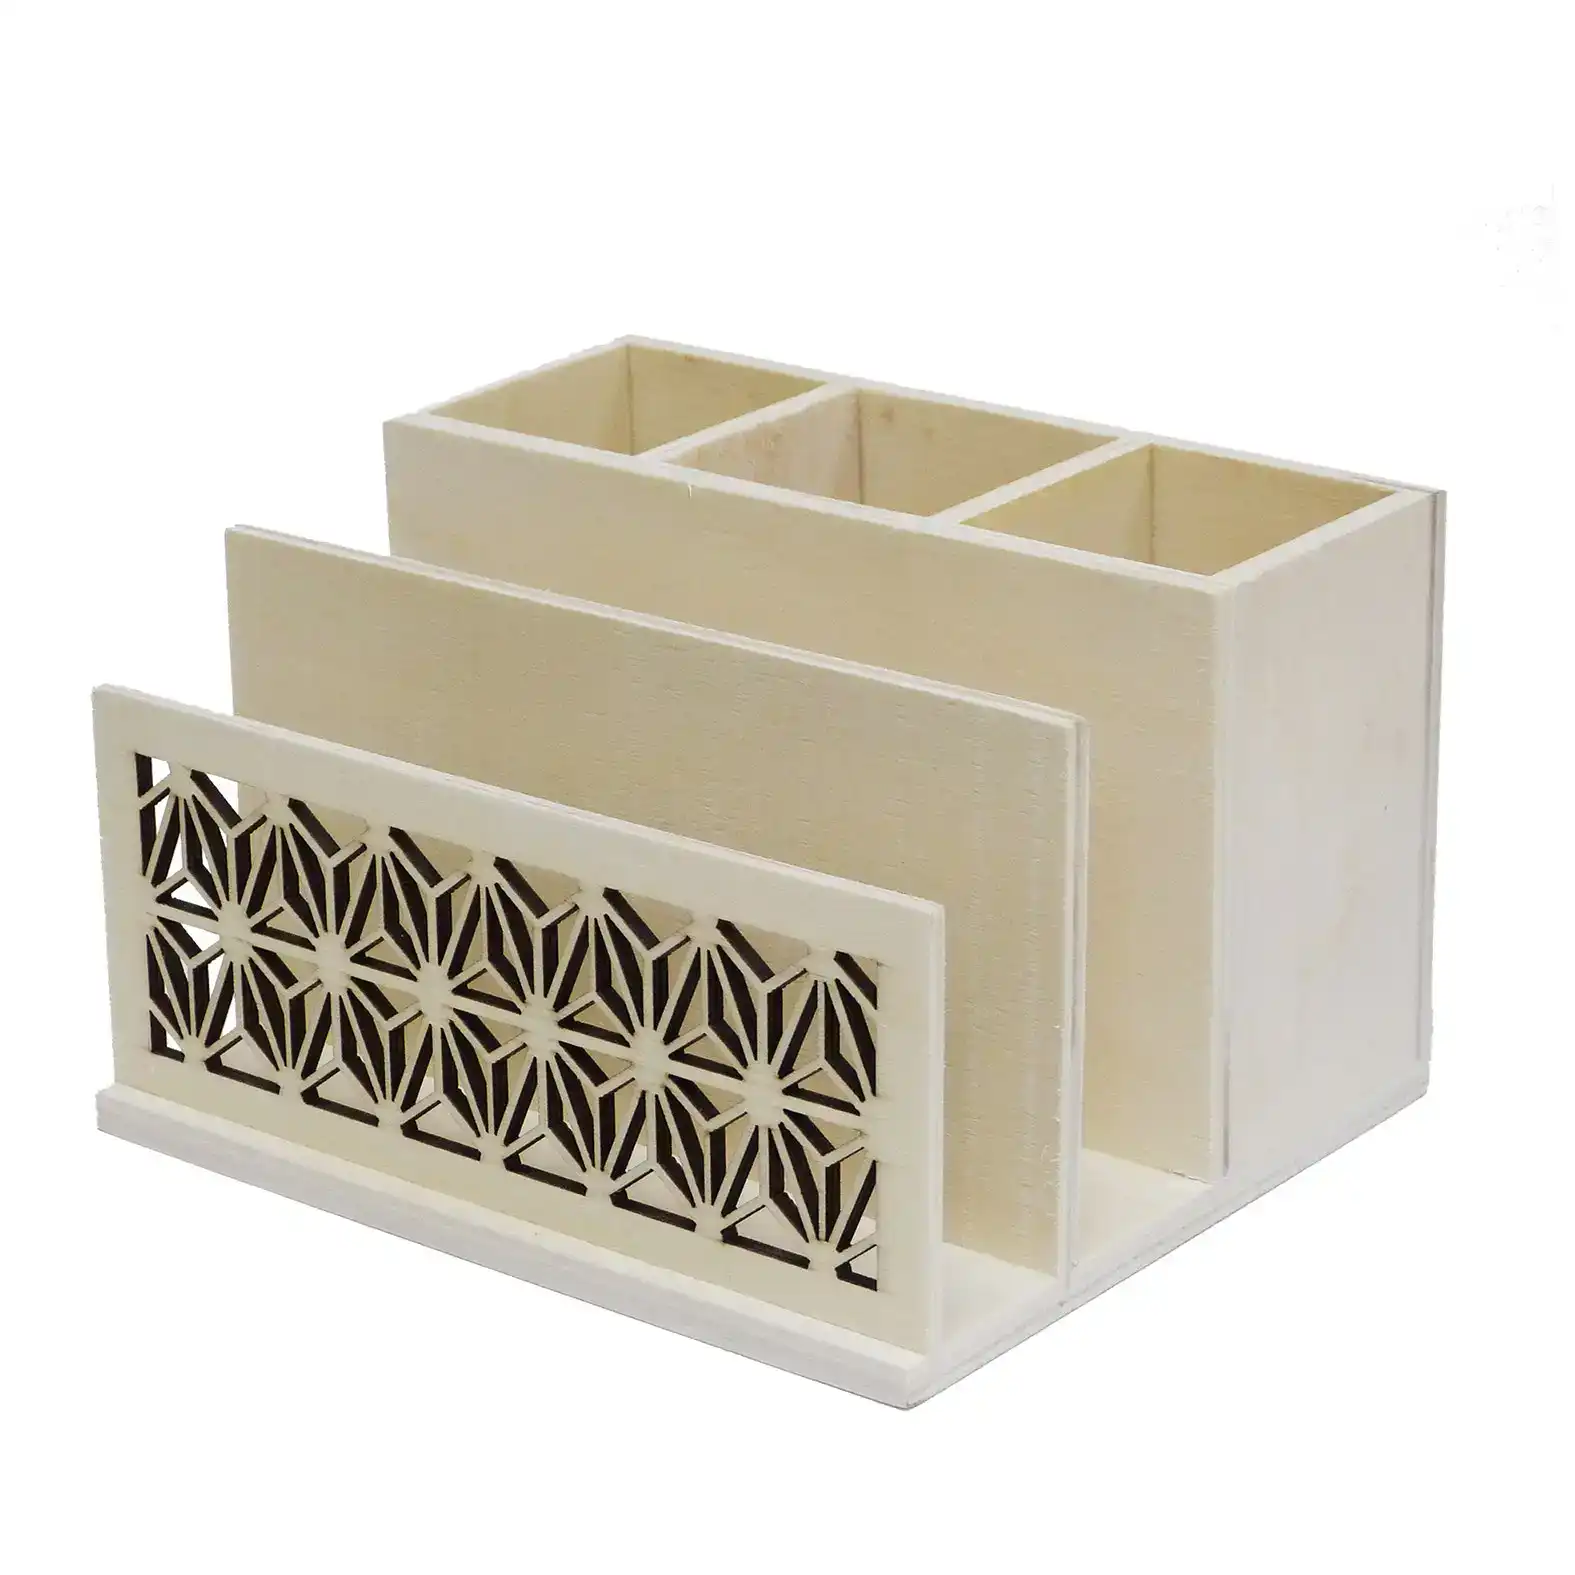 Boyle Art/Craft 18.5x15.3cm Laser Cut Plywood Desk Organiser Storage/Holder